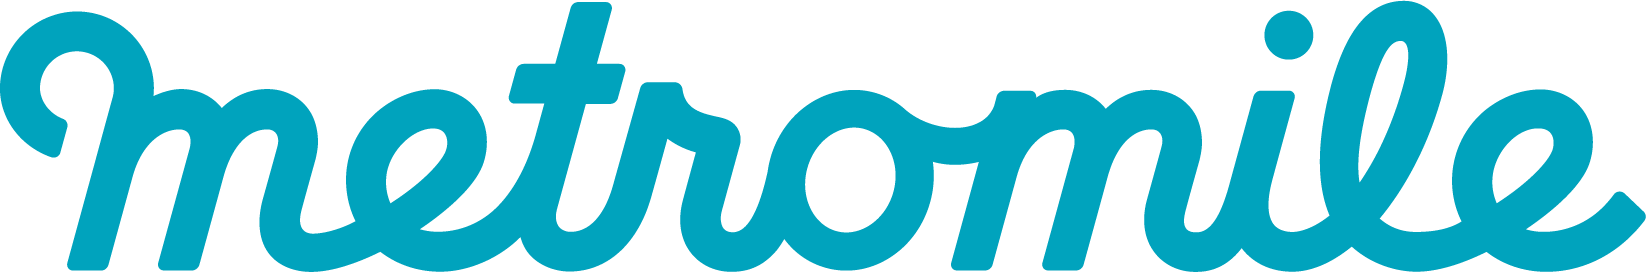 Logo_Blue